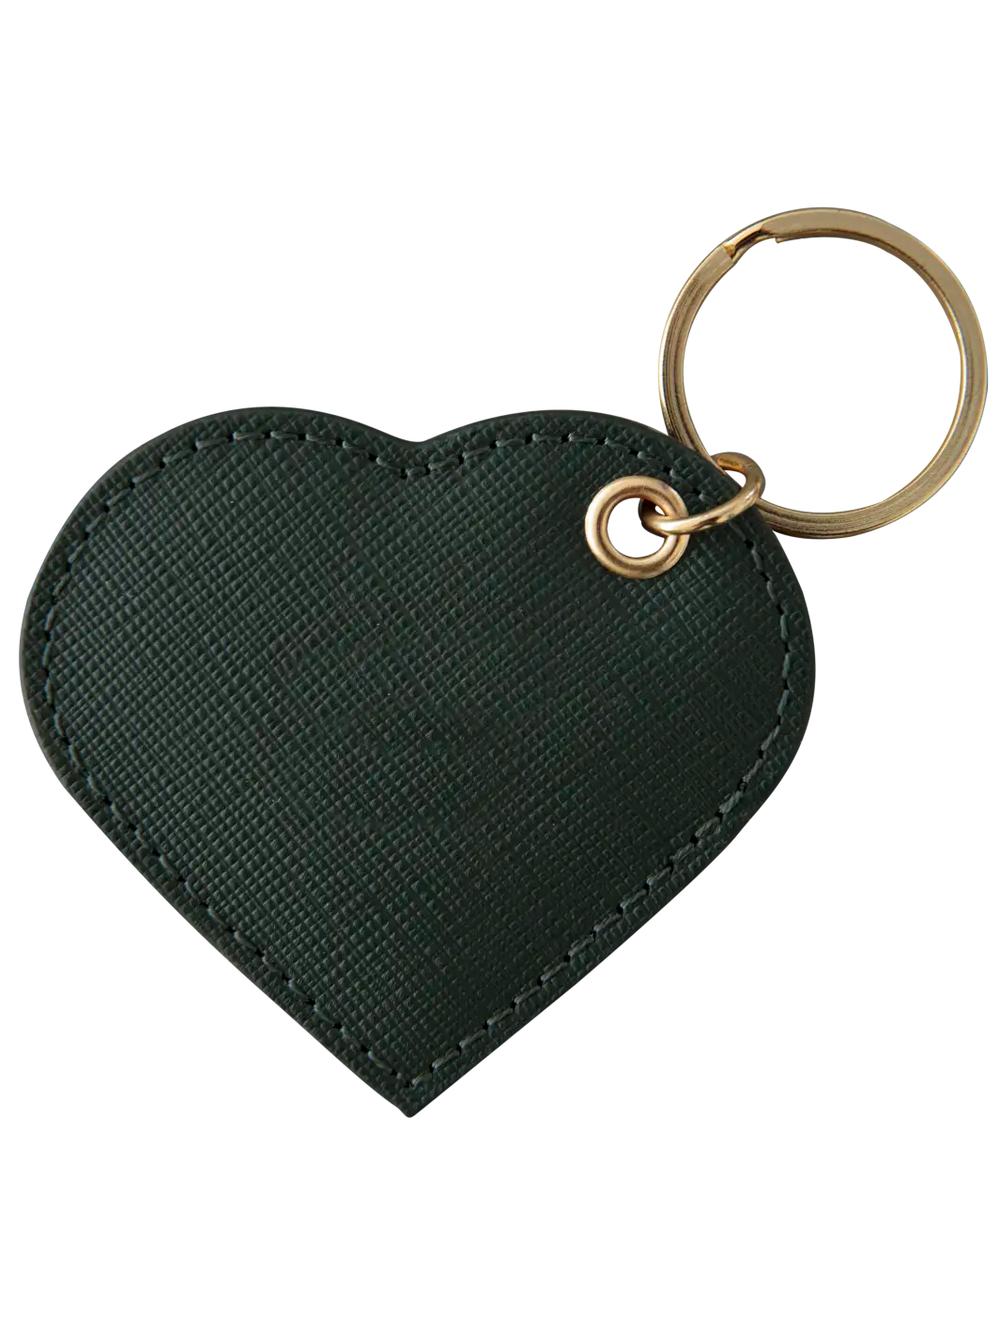 MODE. Heart Key ring - Outlet Evergreen Key rings